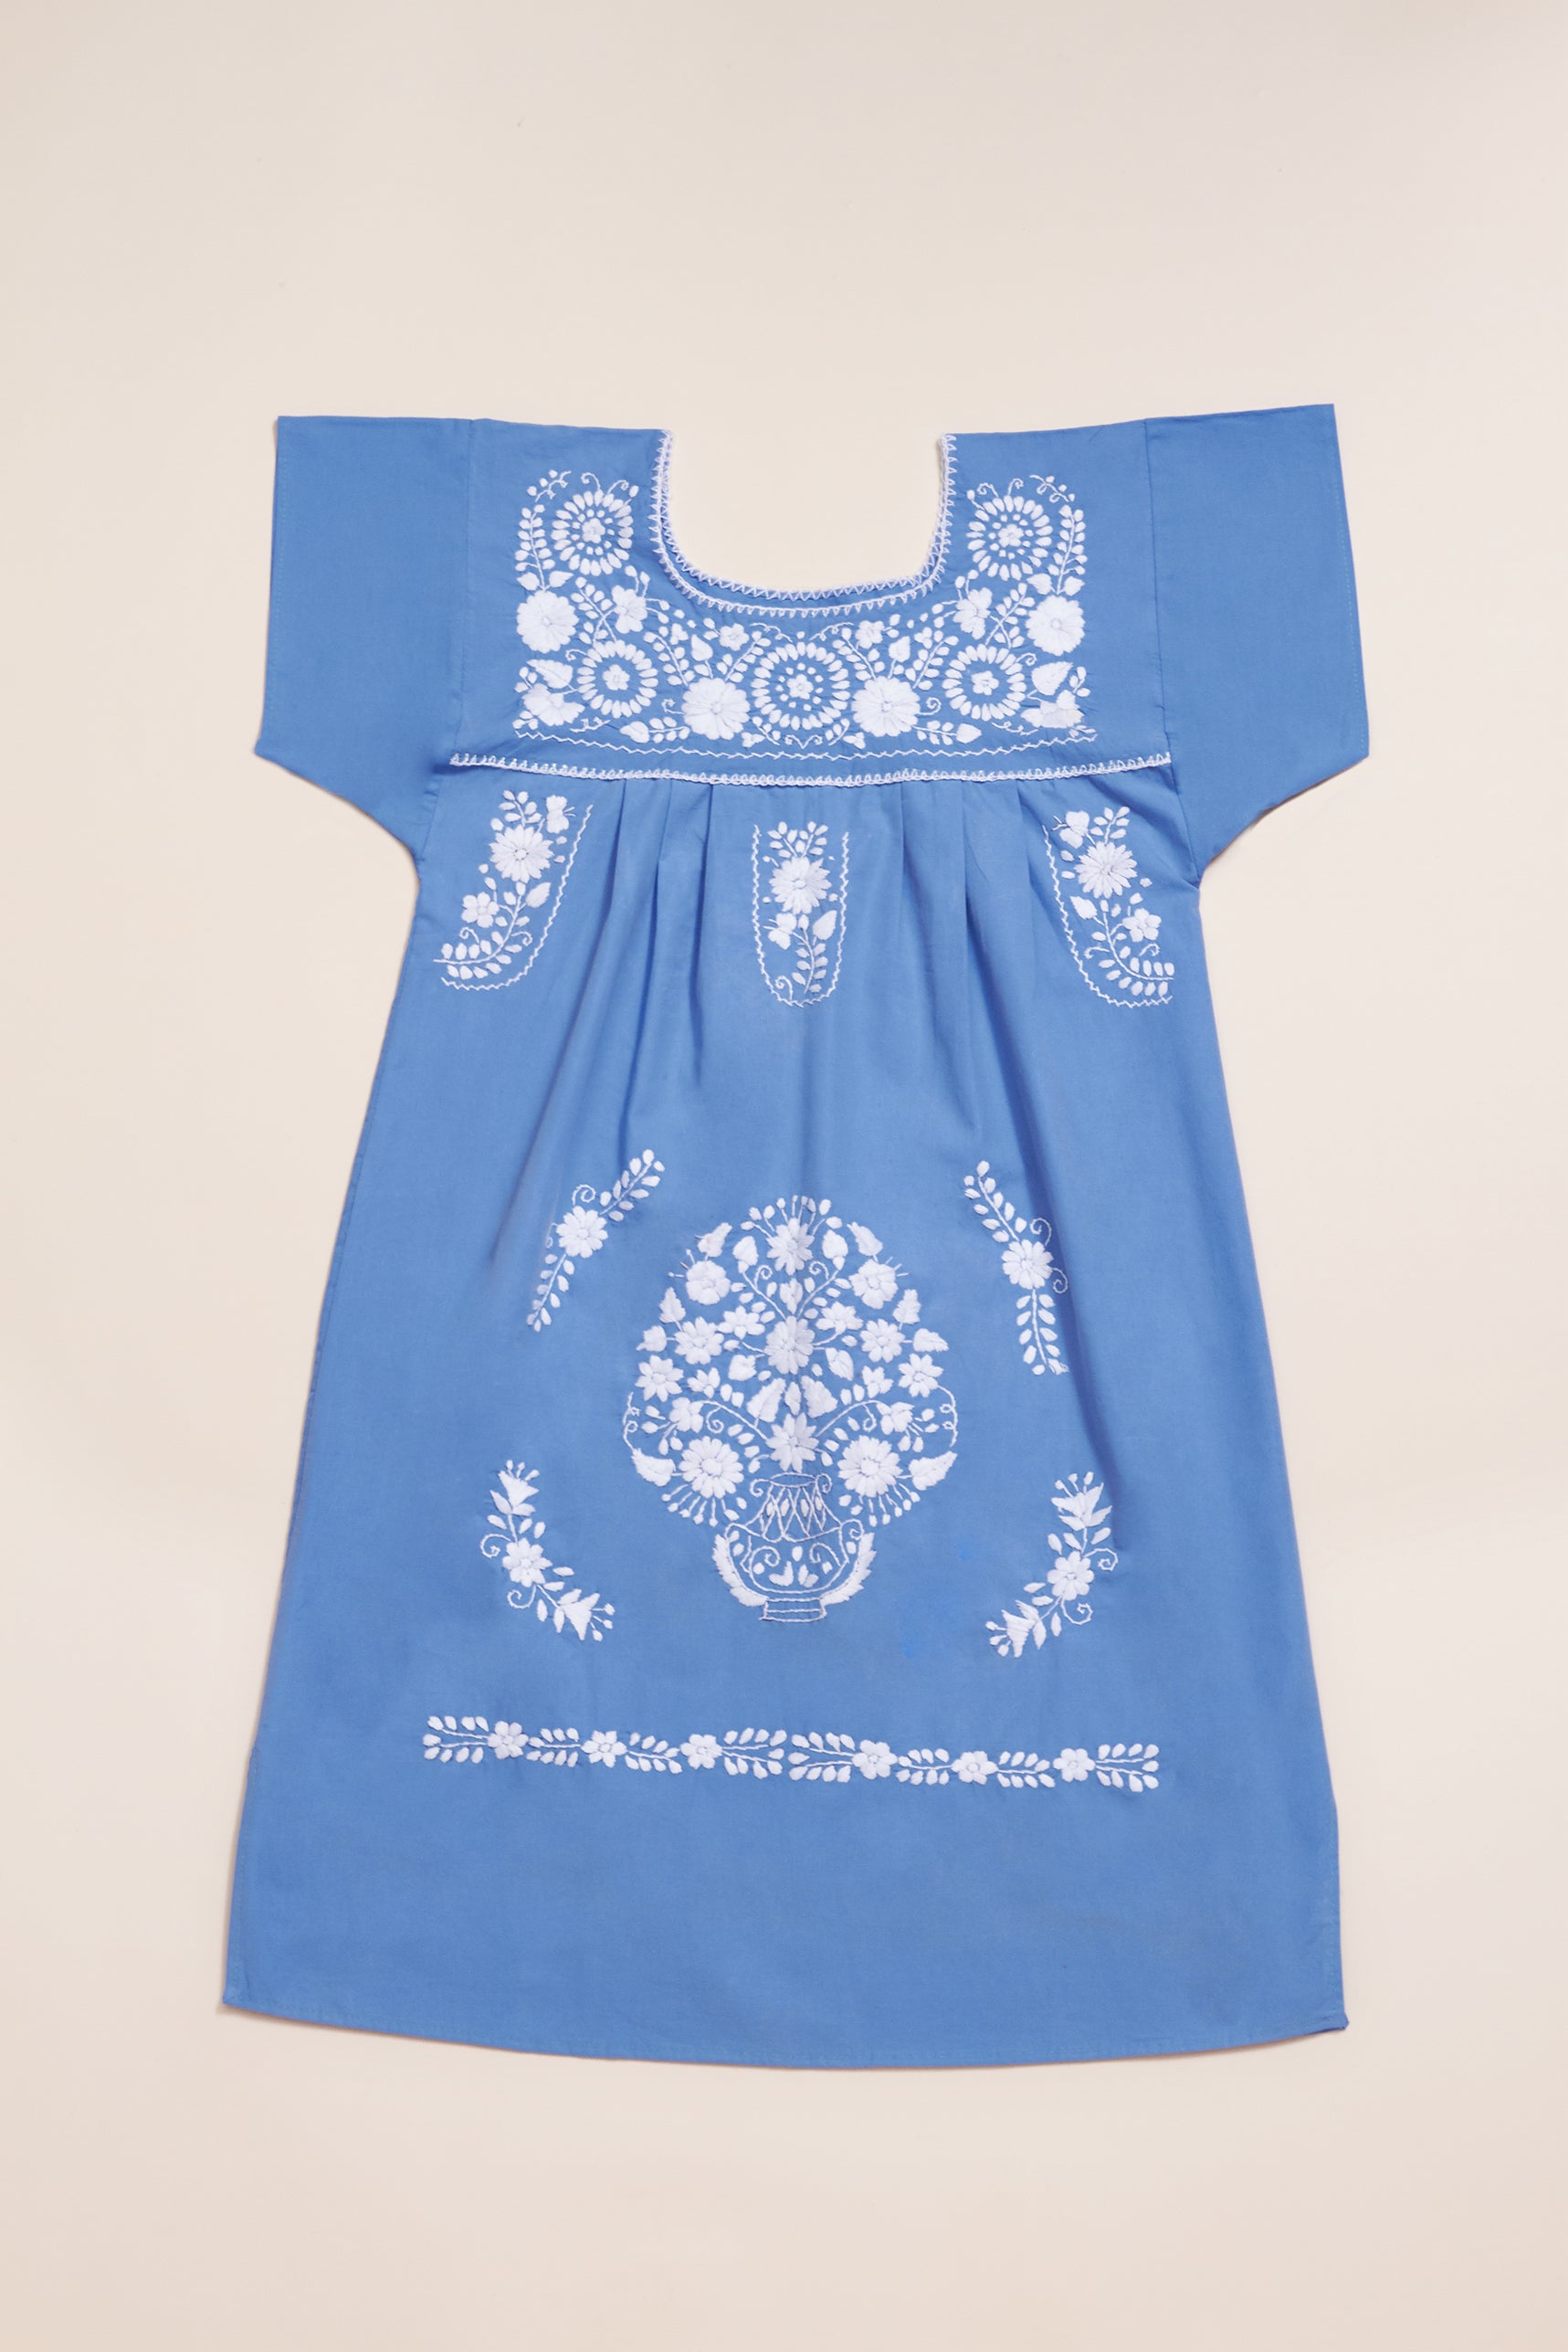 THE SANTA LUPITA BLUE DRESS